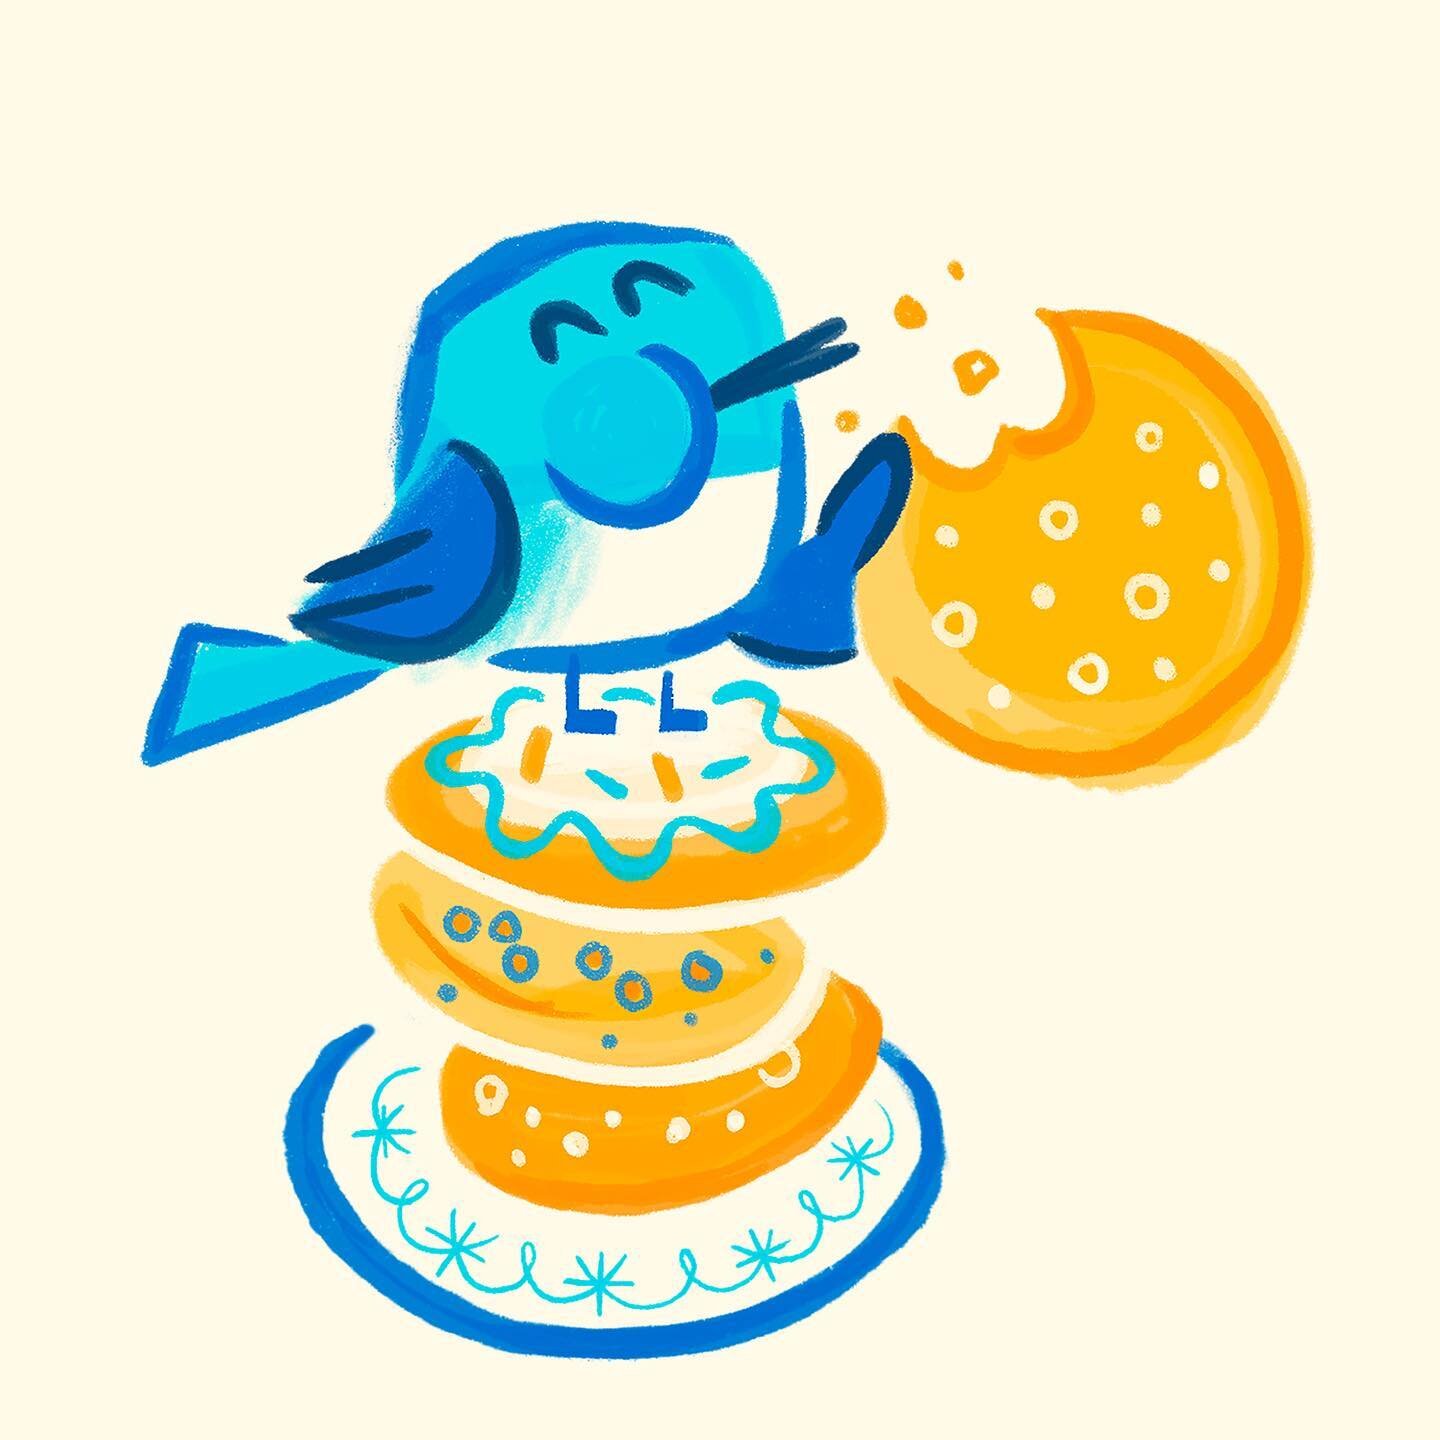 Lil Blu is all about the Cookie Craze! #bakerybranding #bakeryillustration #brandingart #iconillustration #birdillustration #cookies